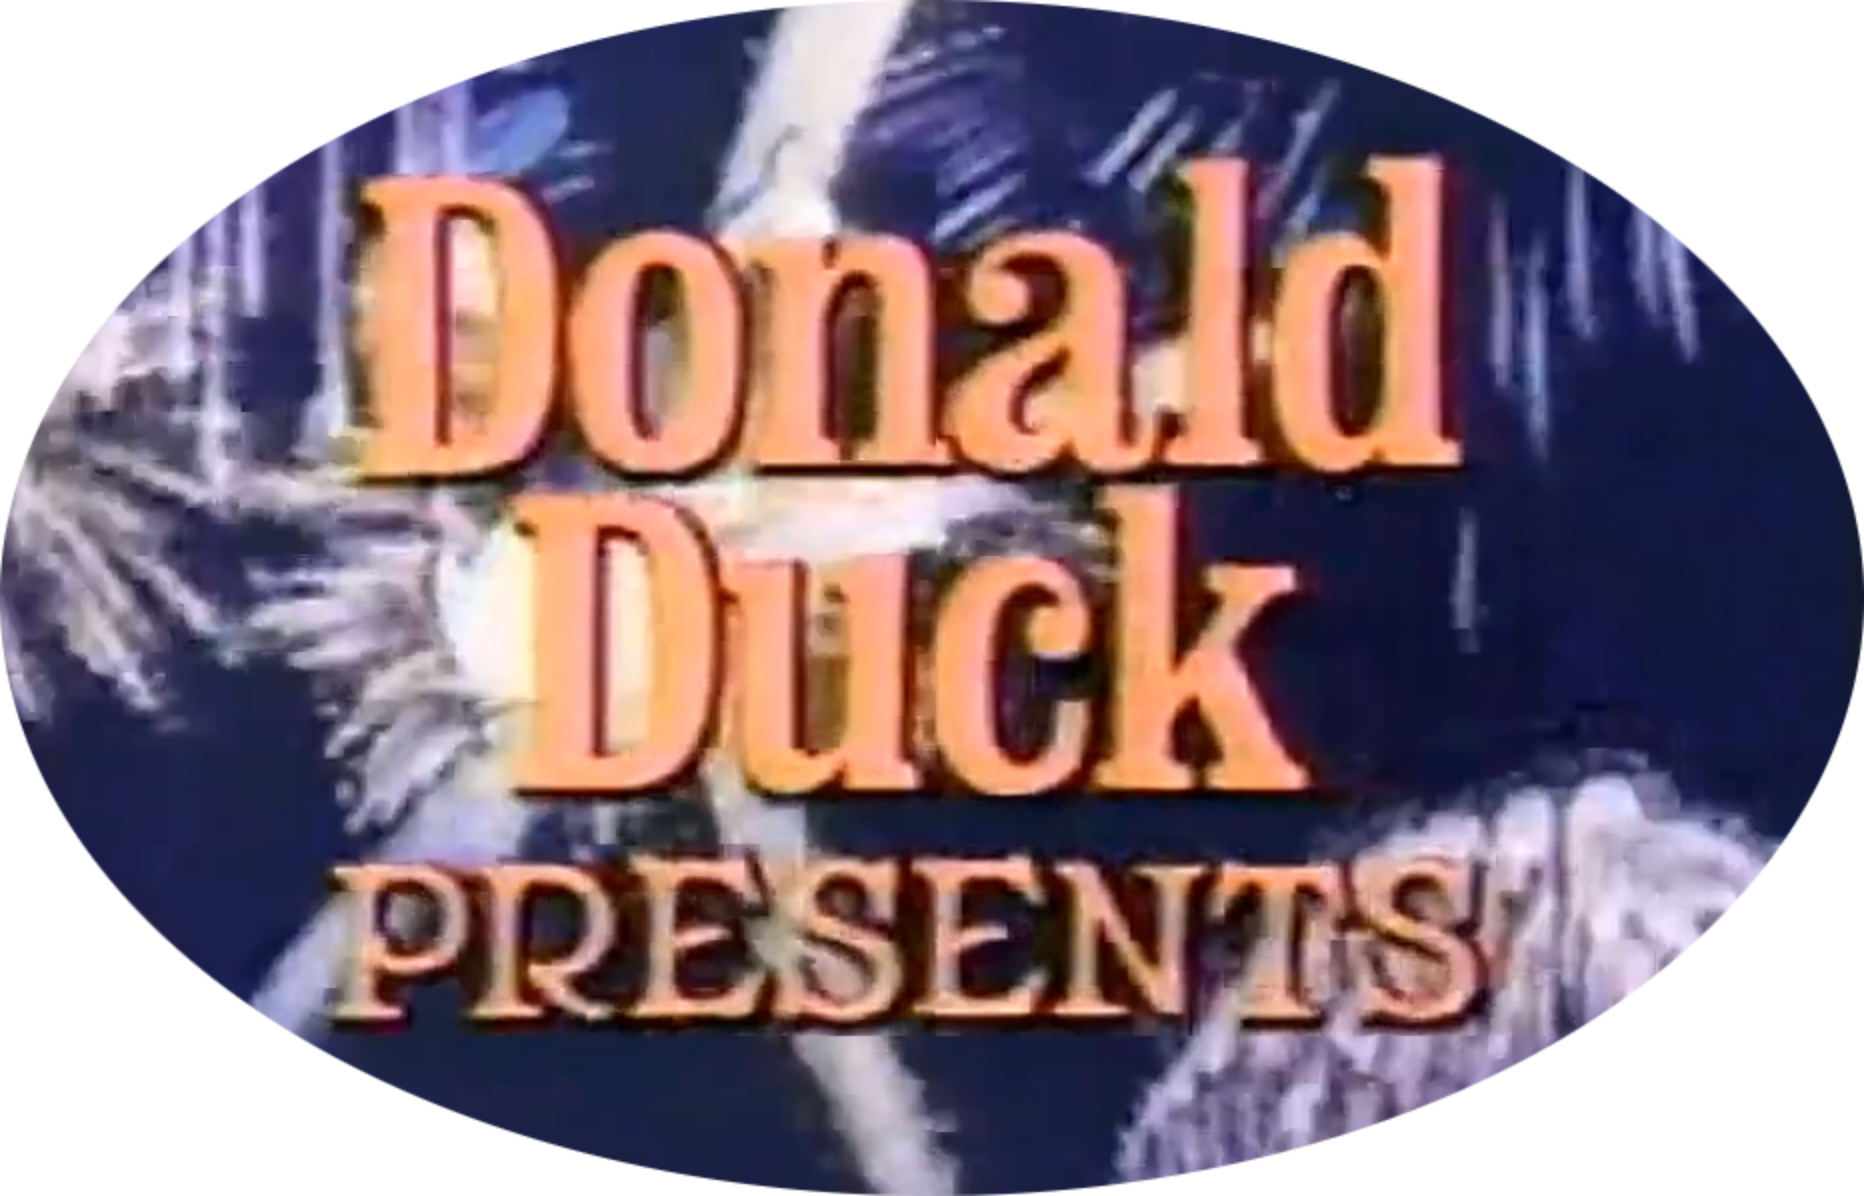 Donald Duck Presents (1 DVD Box Set)